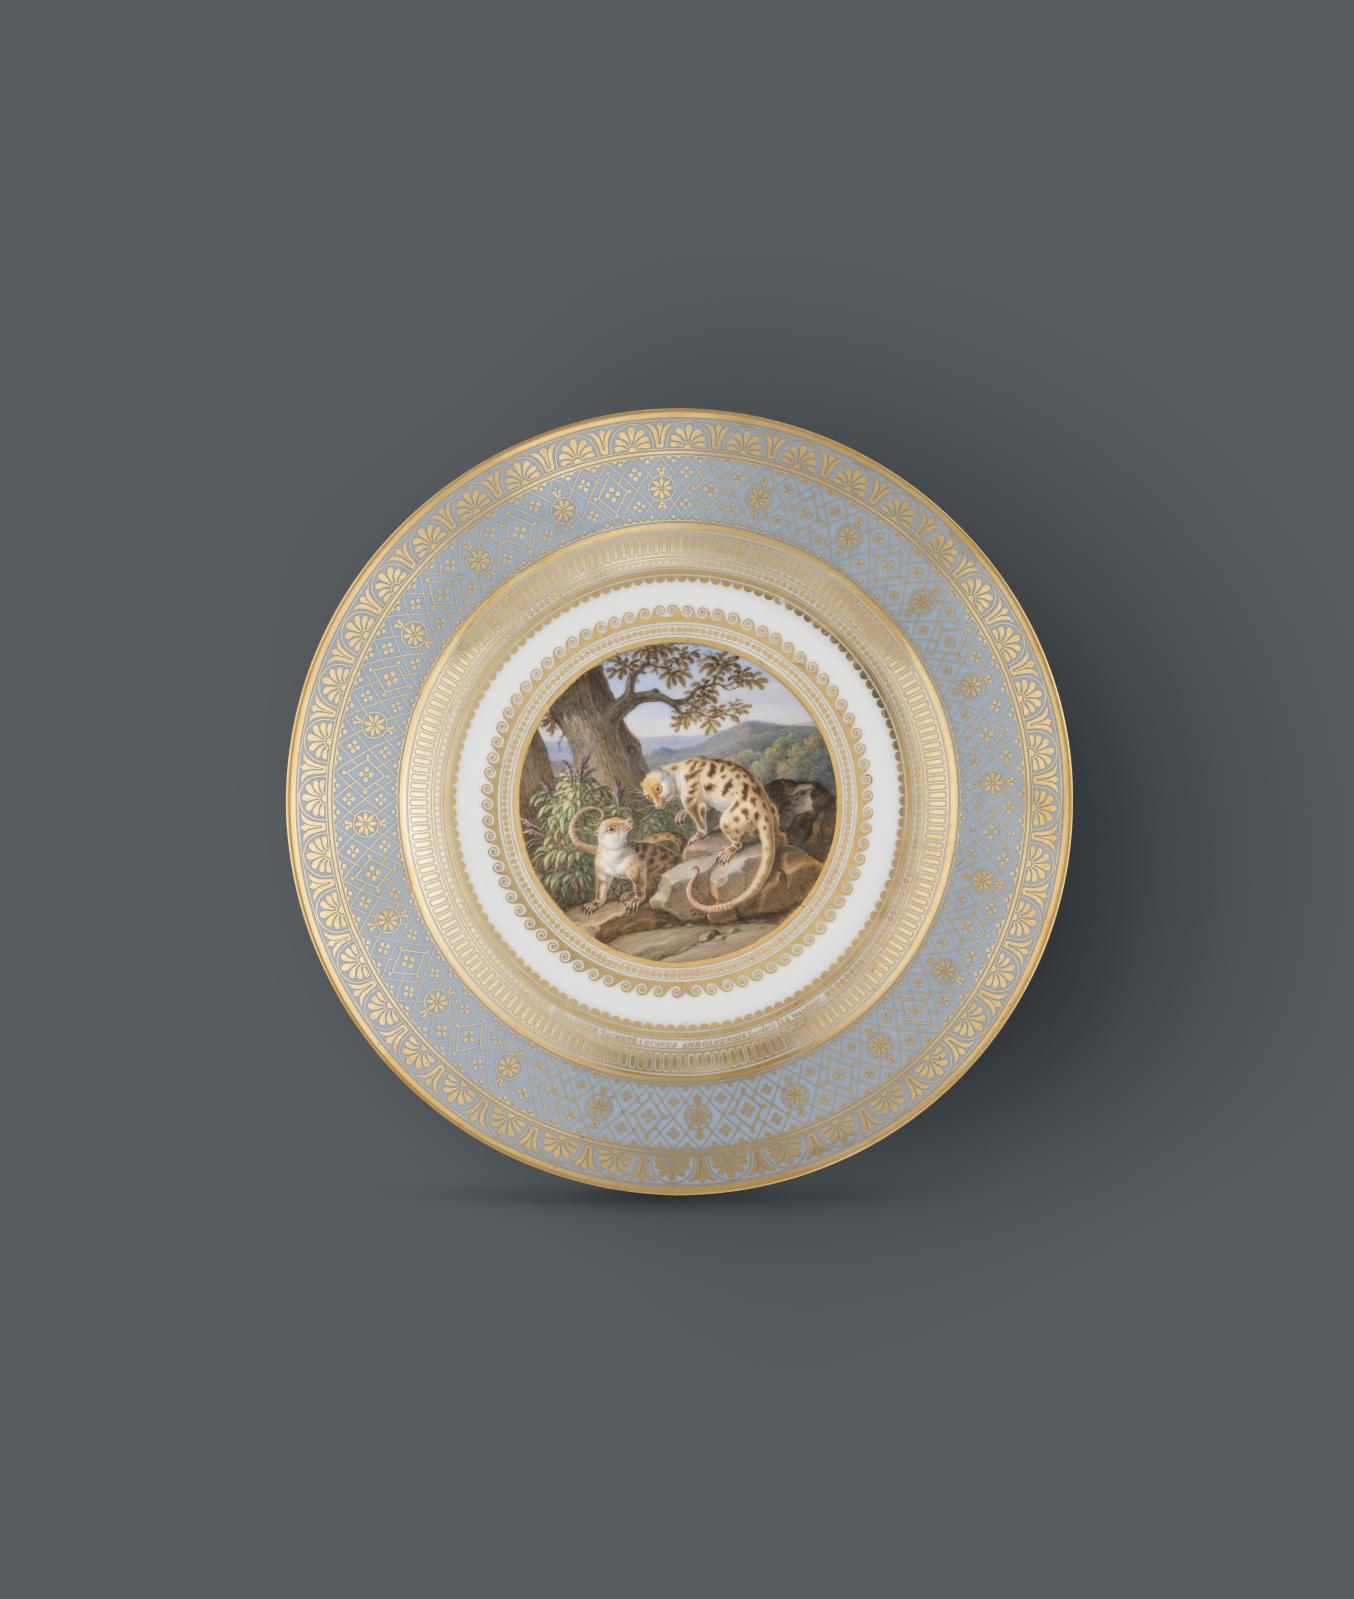 Sèvres: Porcelain as Animal Paintings